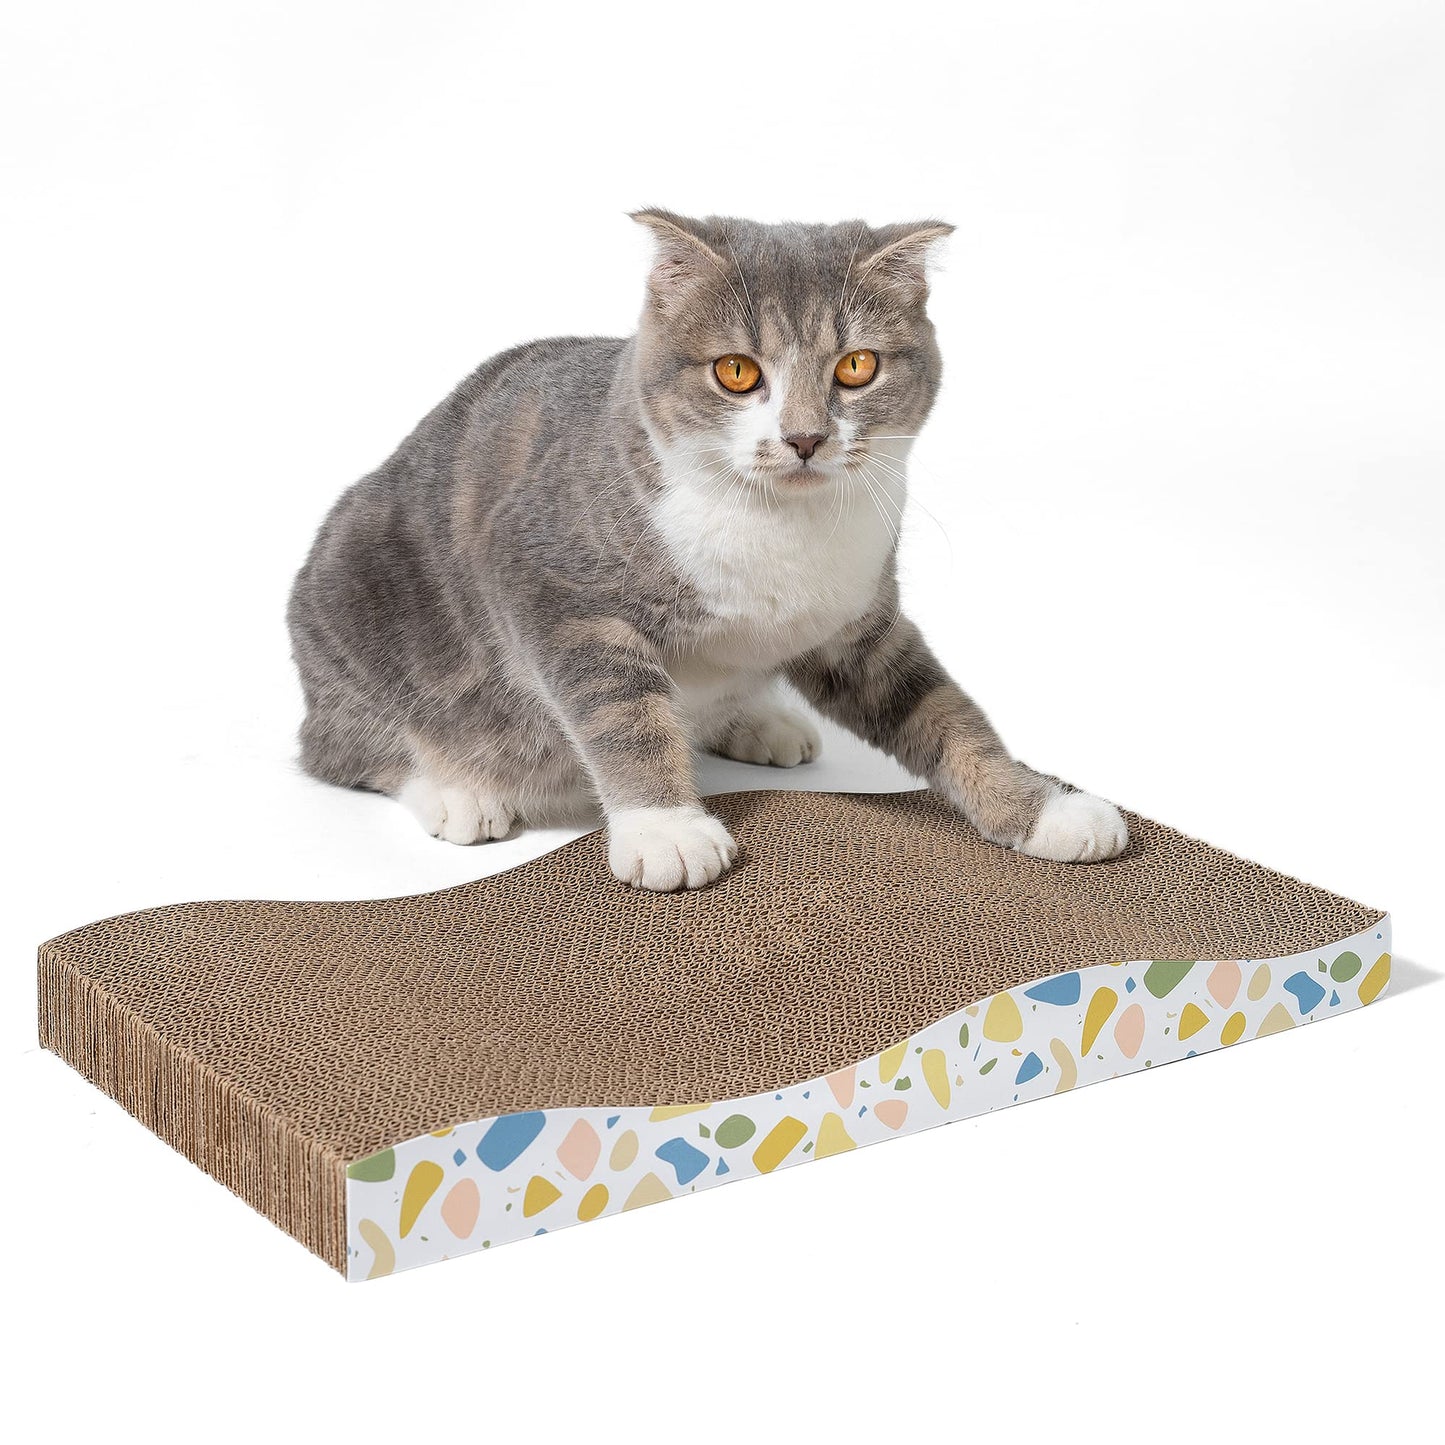 Coching Cat Scratcher Cardboard Cat Scratch Pad with Premium Scratch Textures Design Durable Cat Scratching Pad Reversible